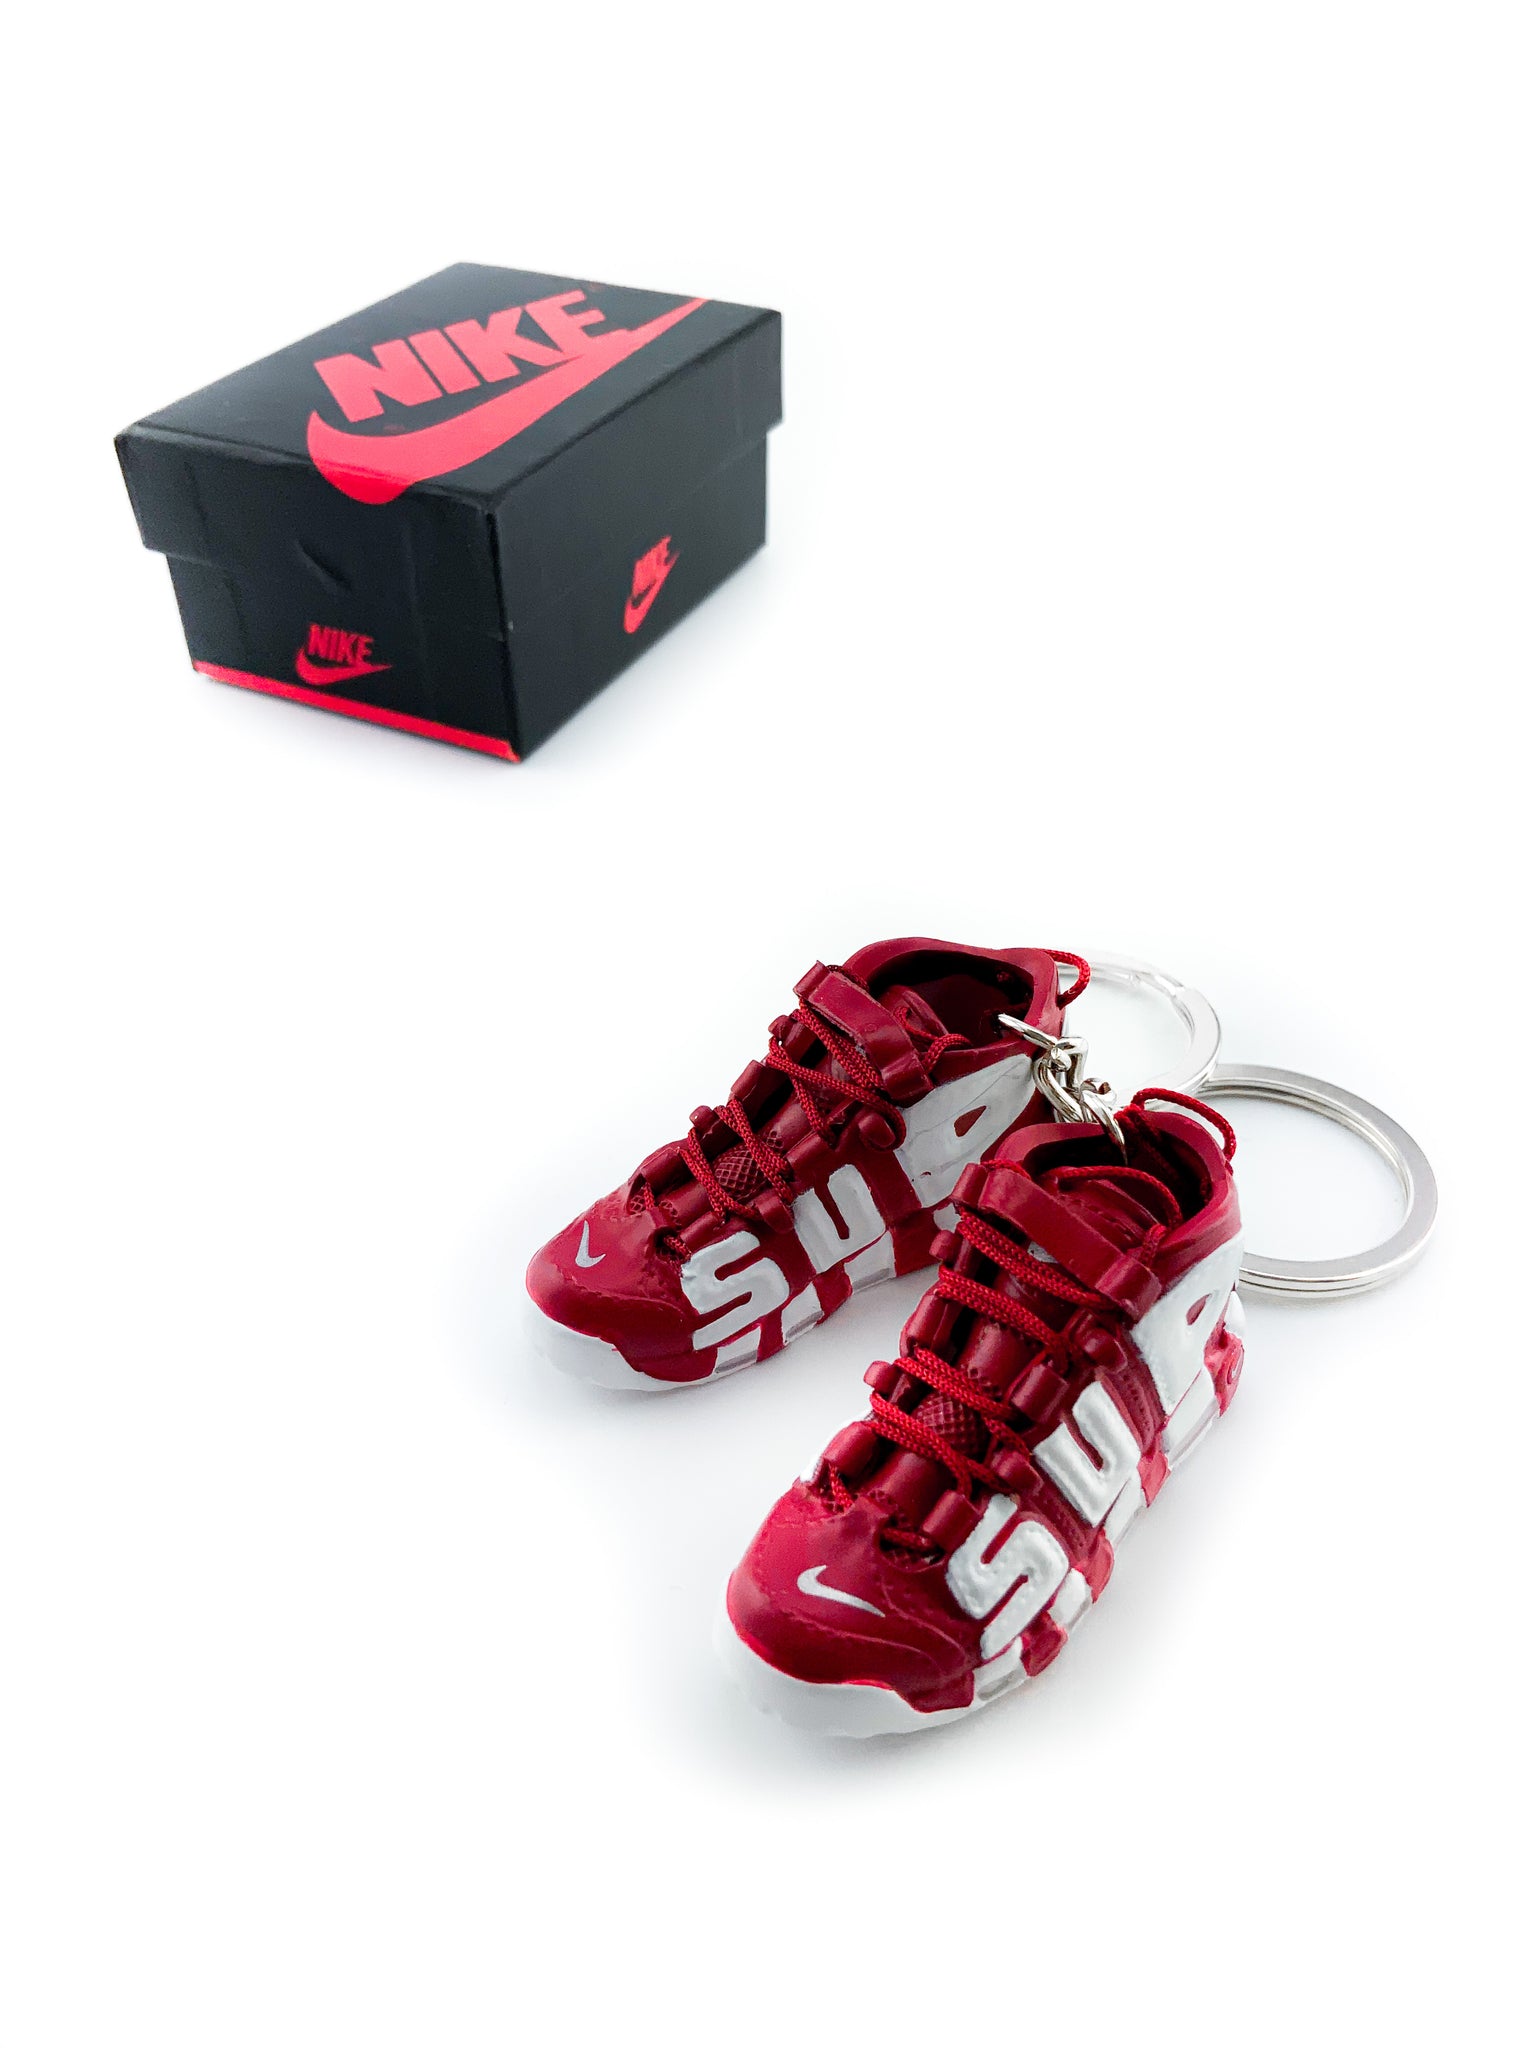 Mini Nike Air More Uptempo x Supreme 'Red' Replica Keychain - KLOUD9